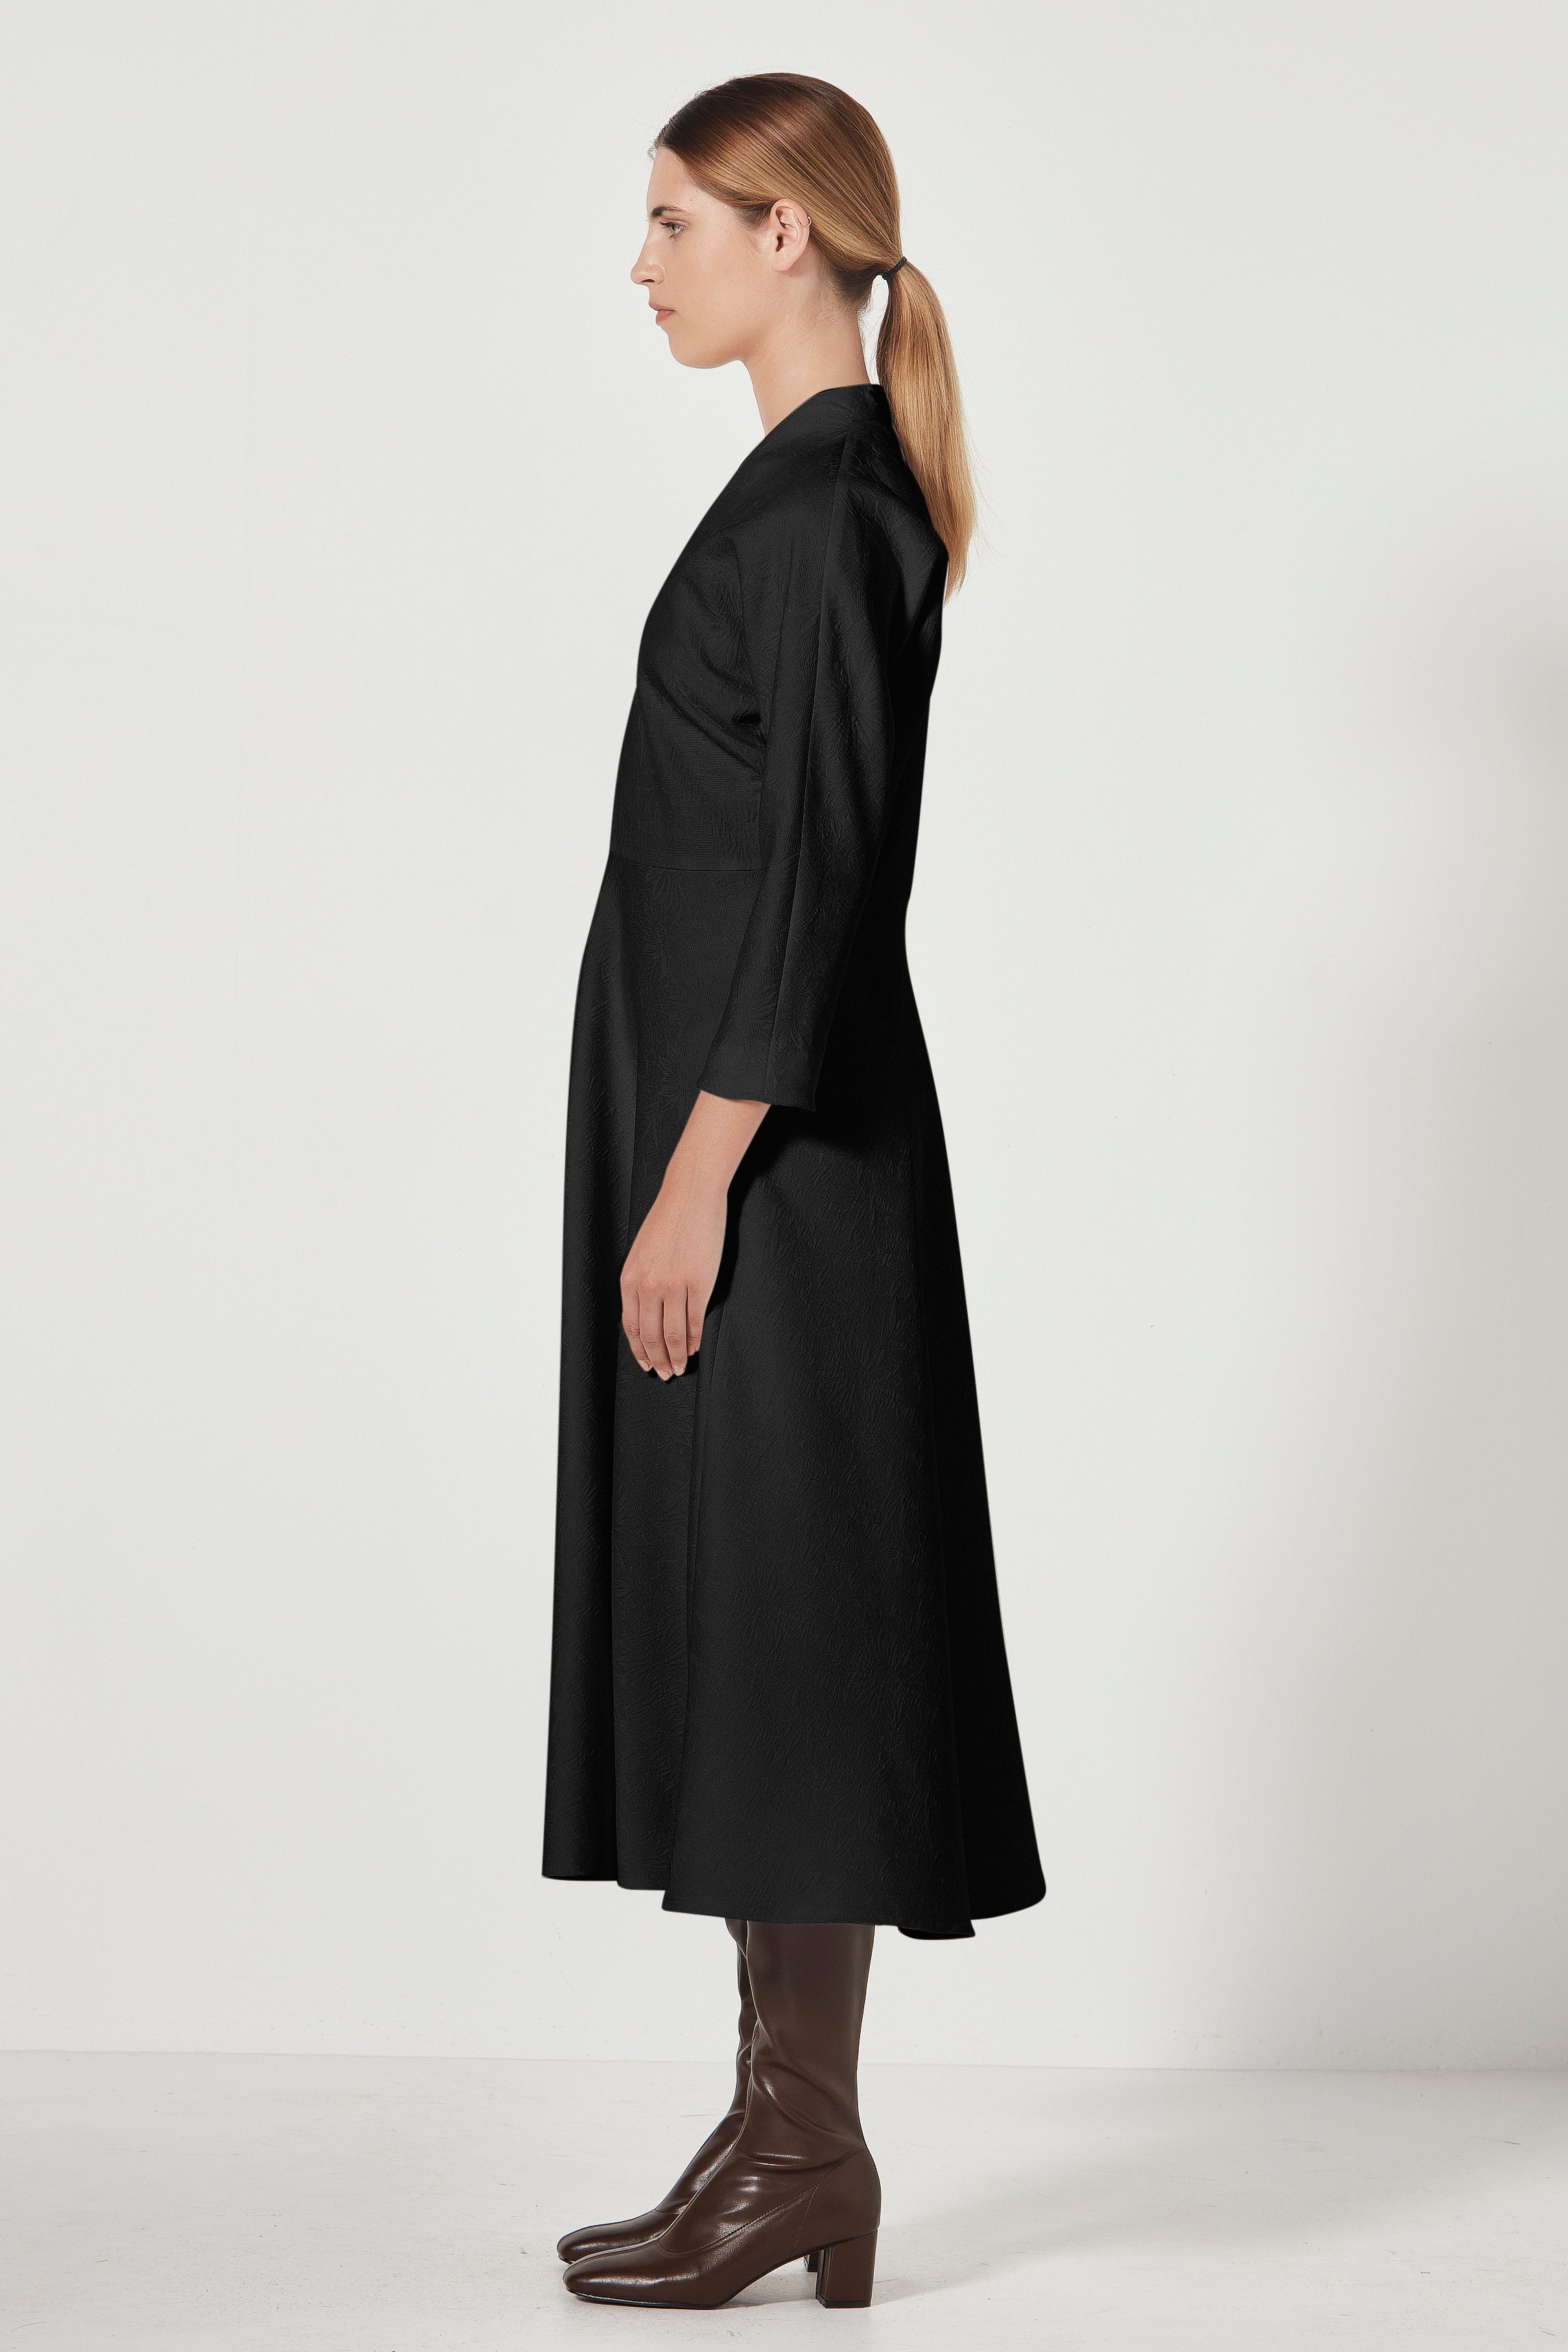 The Amelia Dress in Black Jacquard